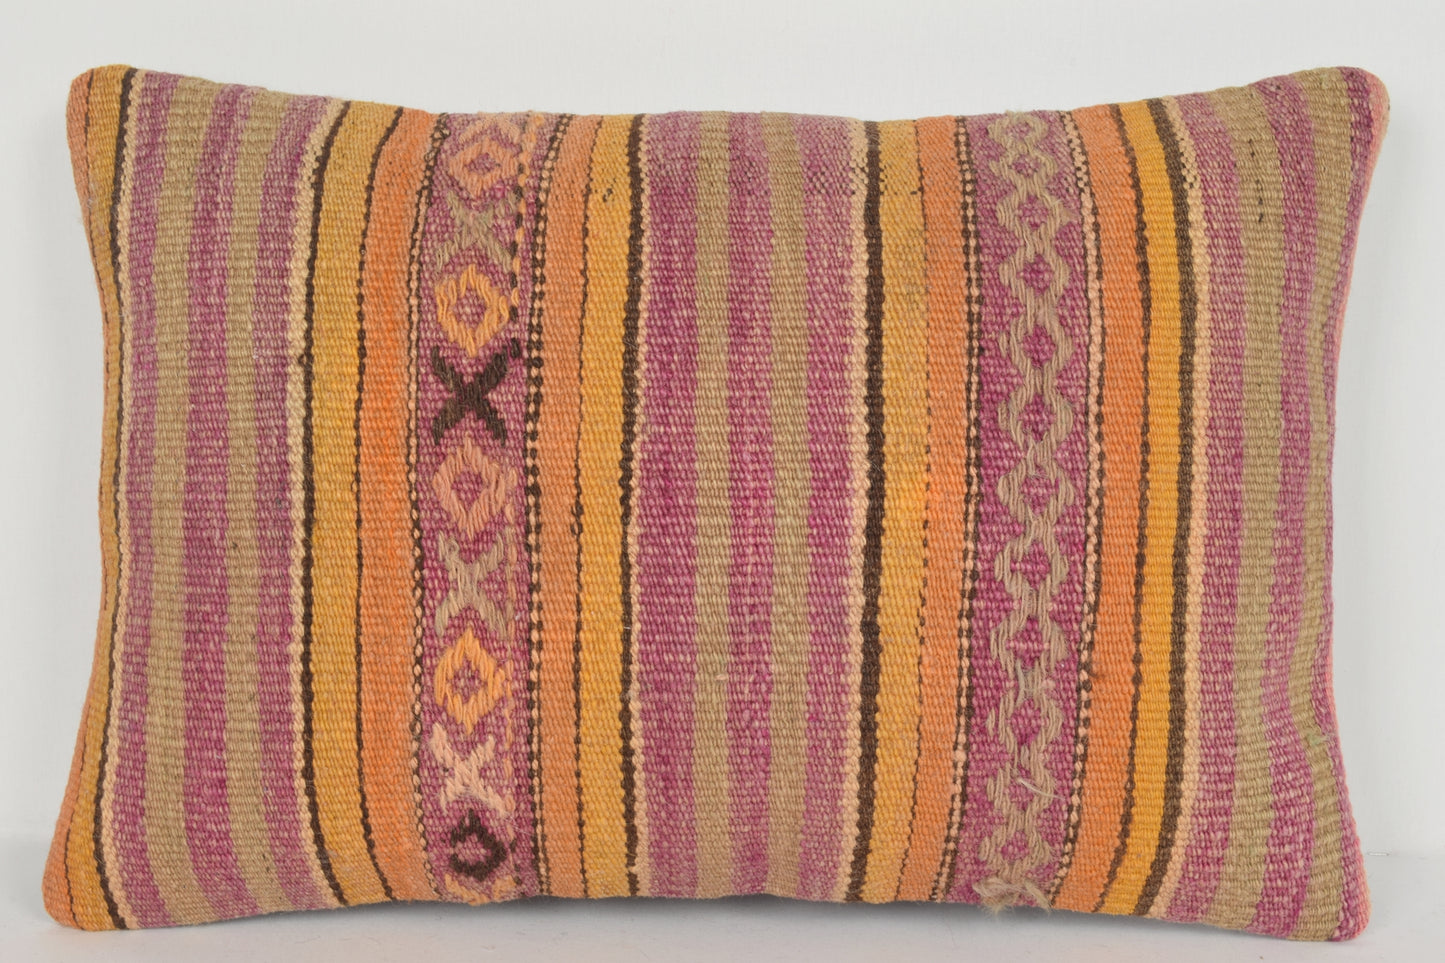 Turkish Style Floor Cushions E00608 Lumbar Folk art Southwestern Bedding